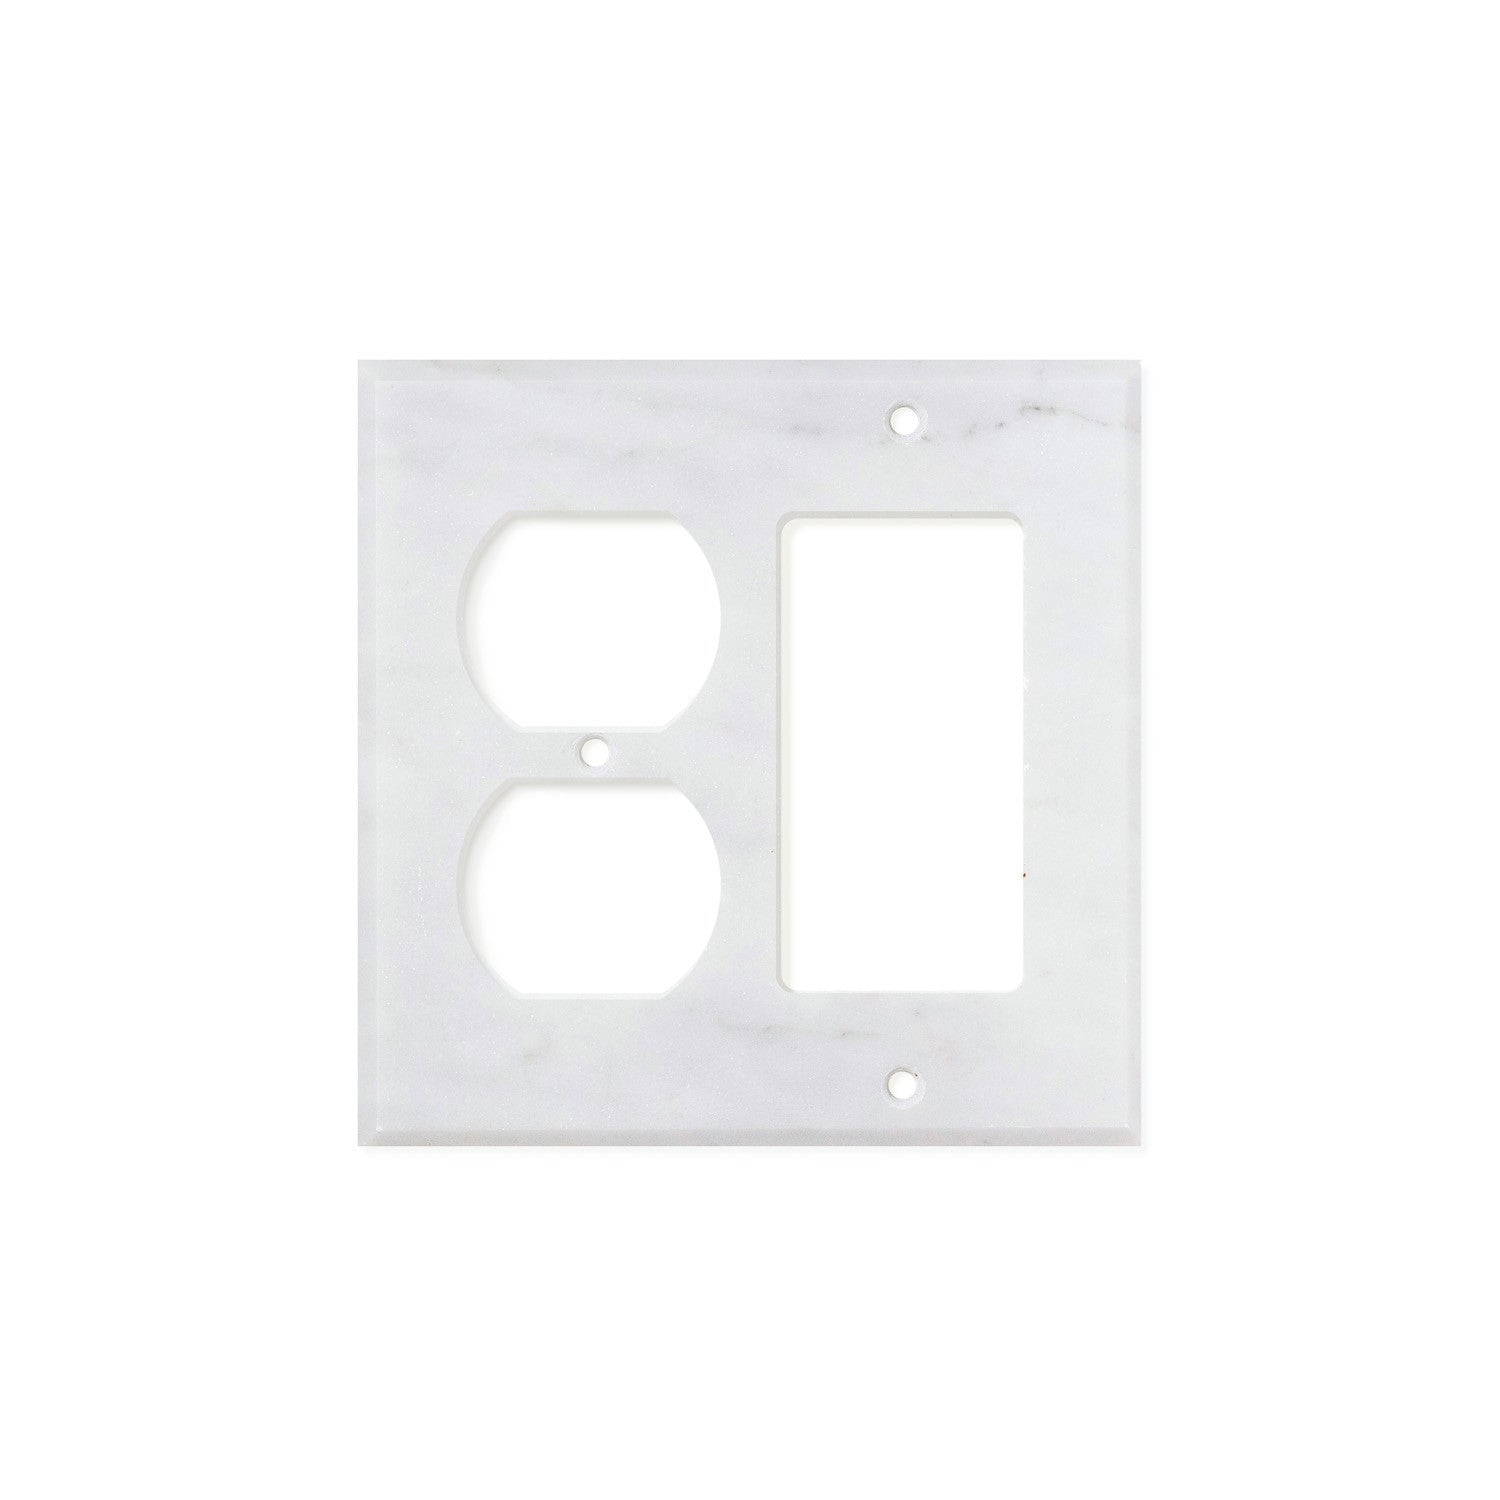 Bianco Carrara (Carrara White) Marble Switch Plate Cover, Honed (ROCKER DUPLEX) - Tilephile